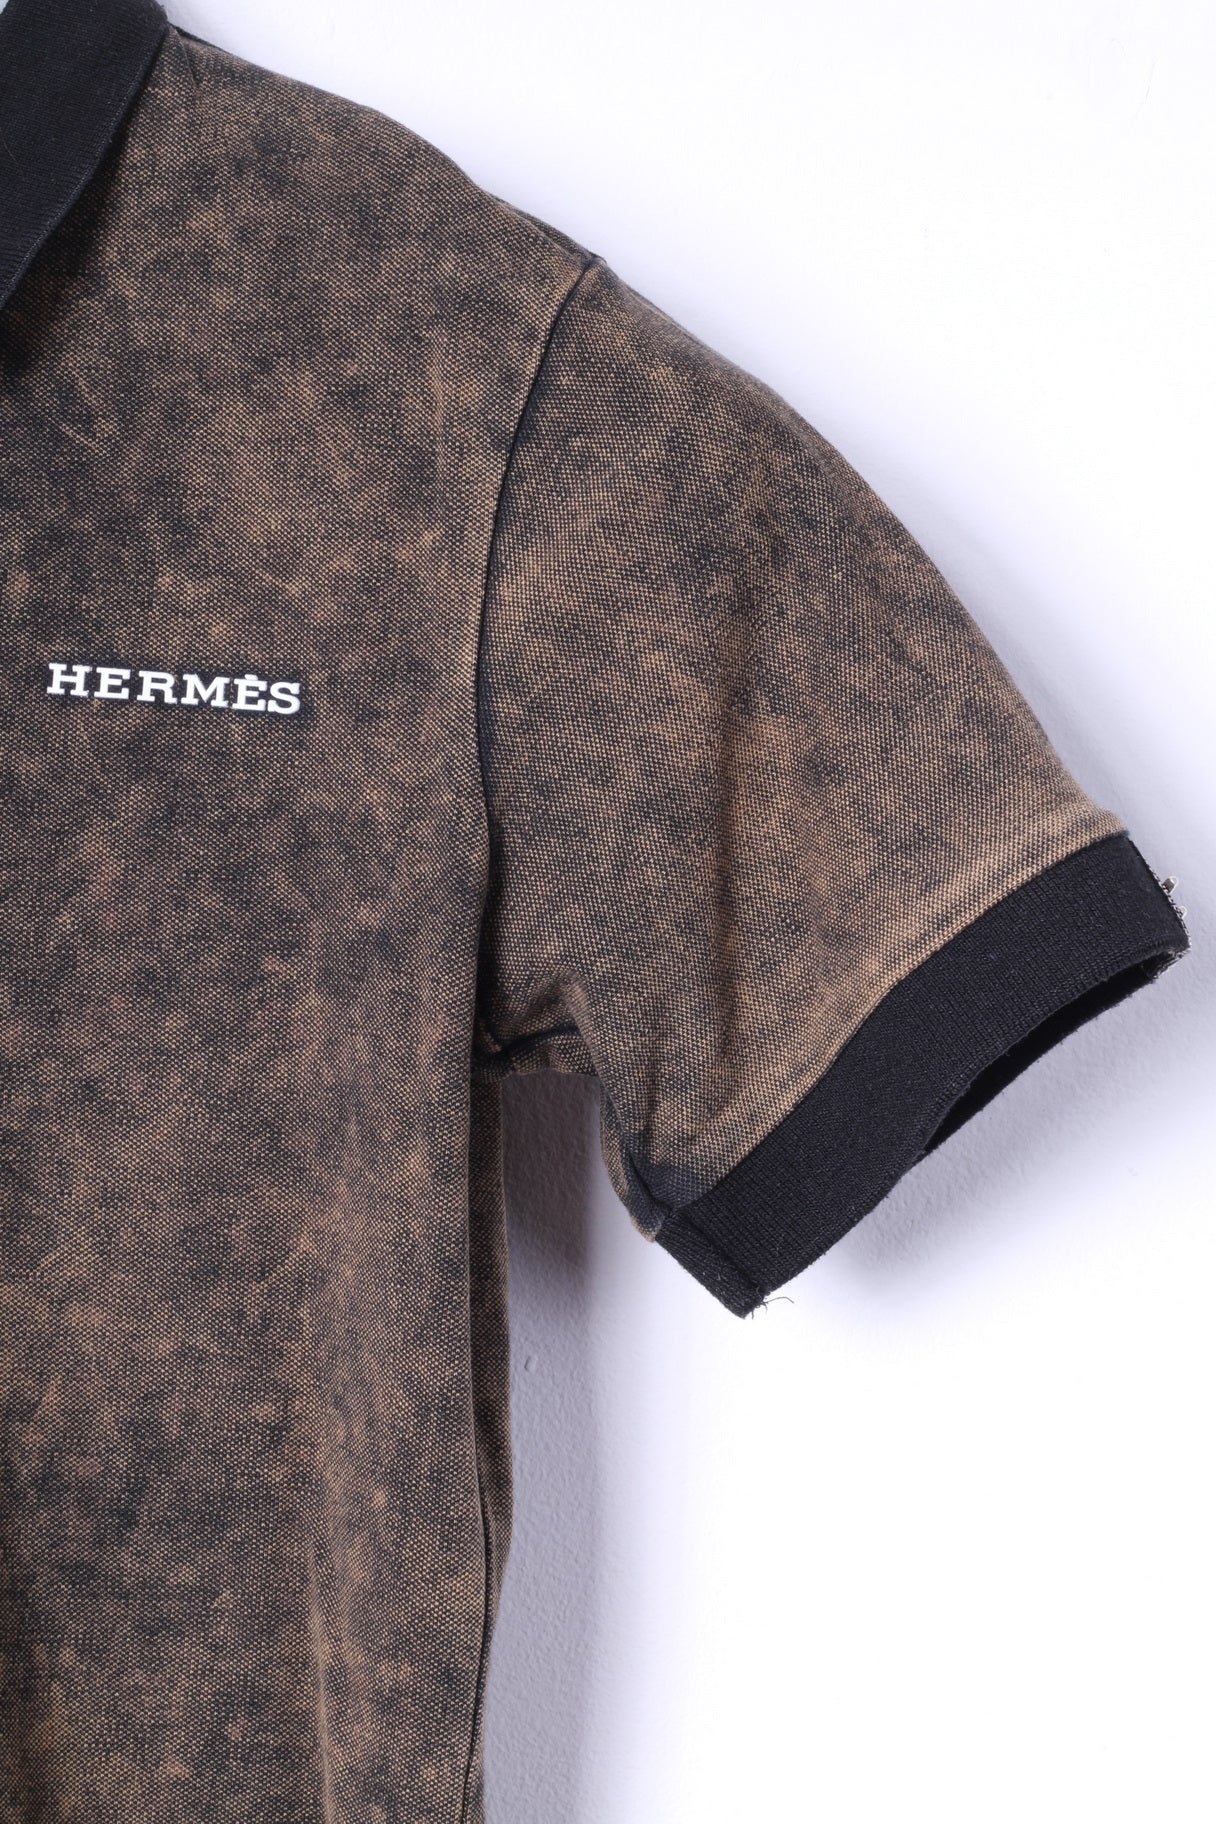 Hermes Paris Womens M Polo Shirt Brown Cotton